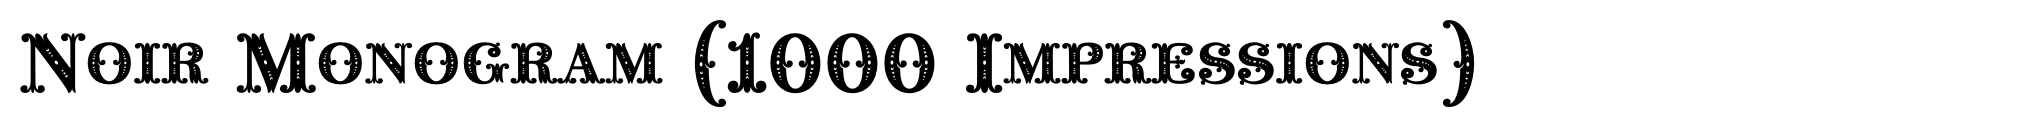 Noir Monogram (1000 Impressions) image